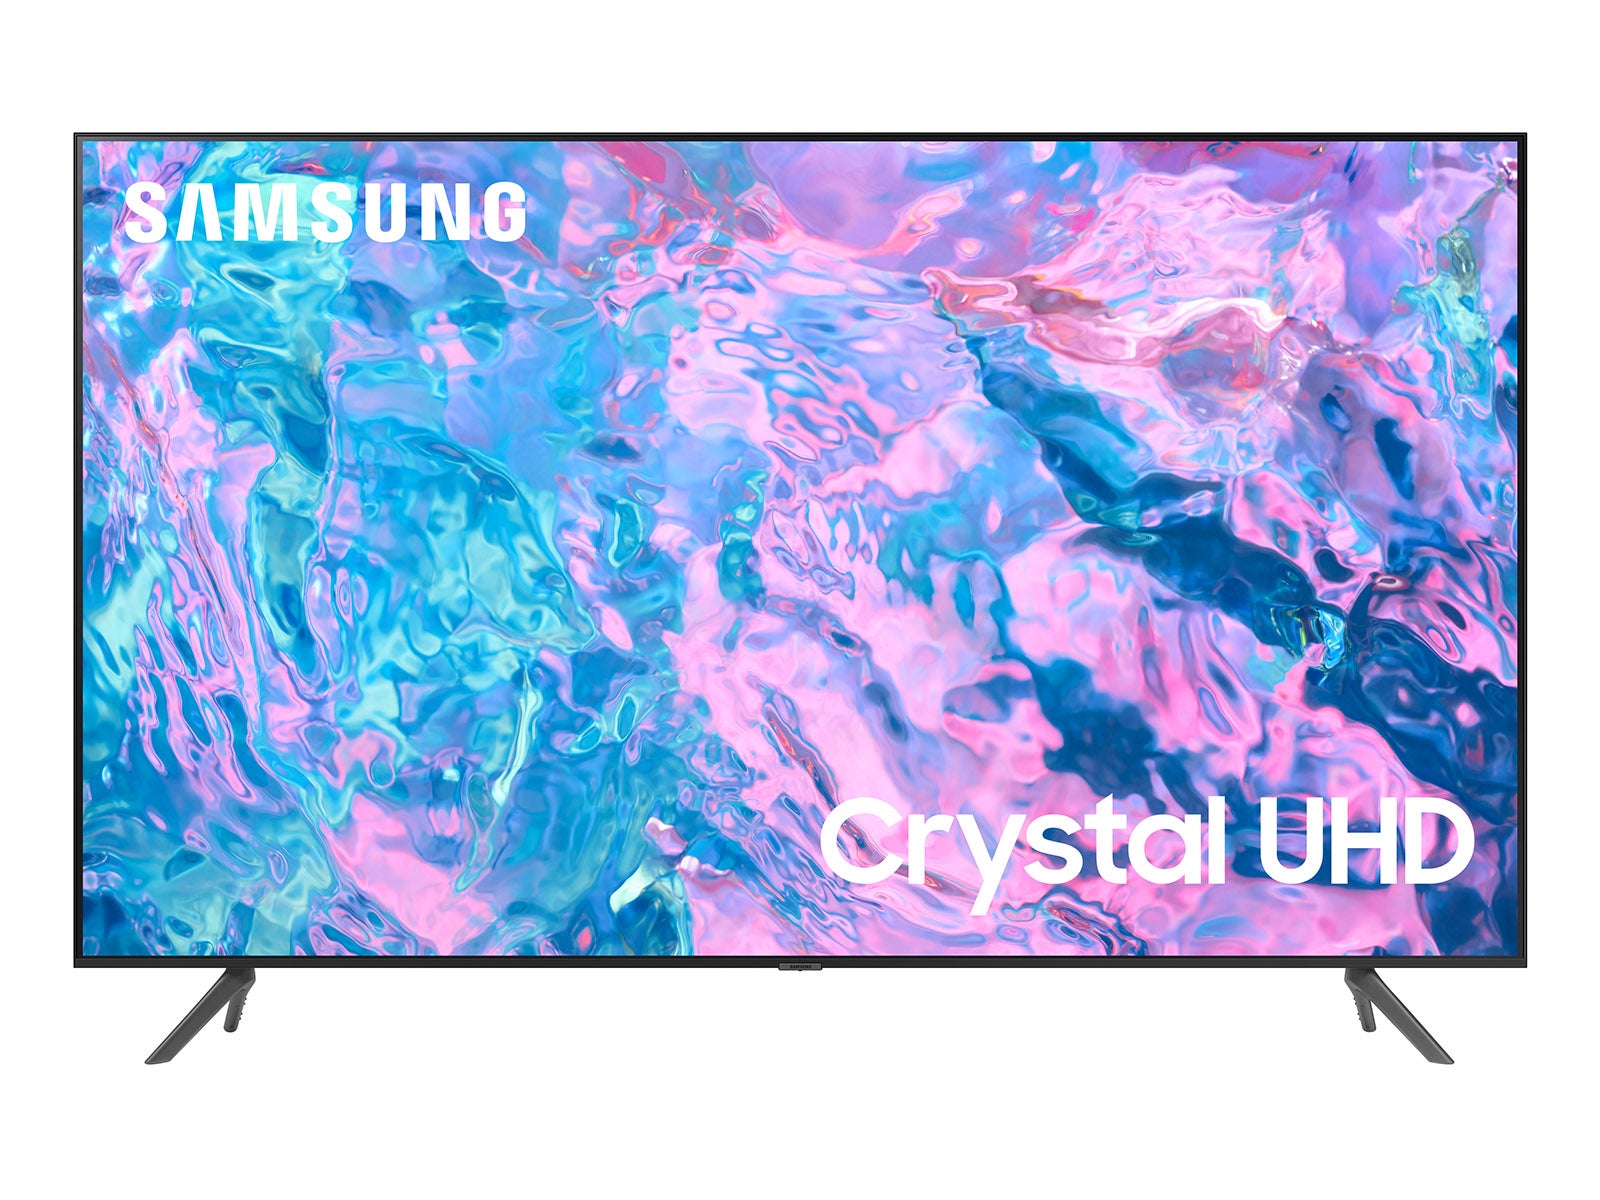 SAMSUNG 65" Class CU7000 Crystal UHD 4K Smart TV UN65CU7000FXZA New - image 1 of 13